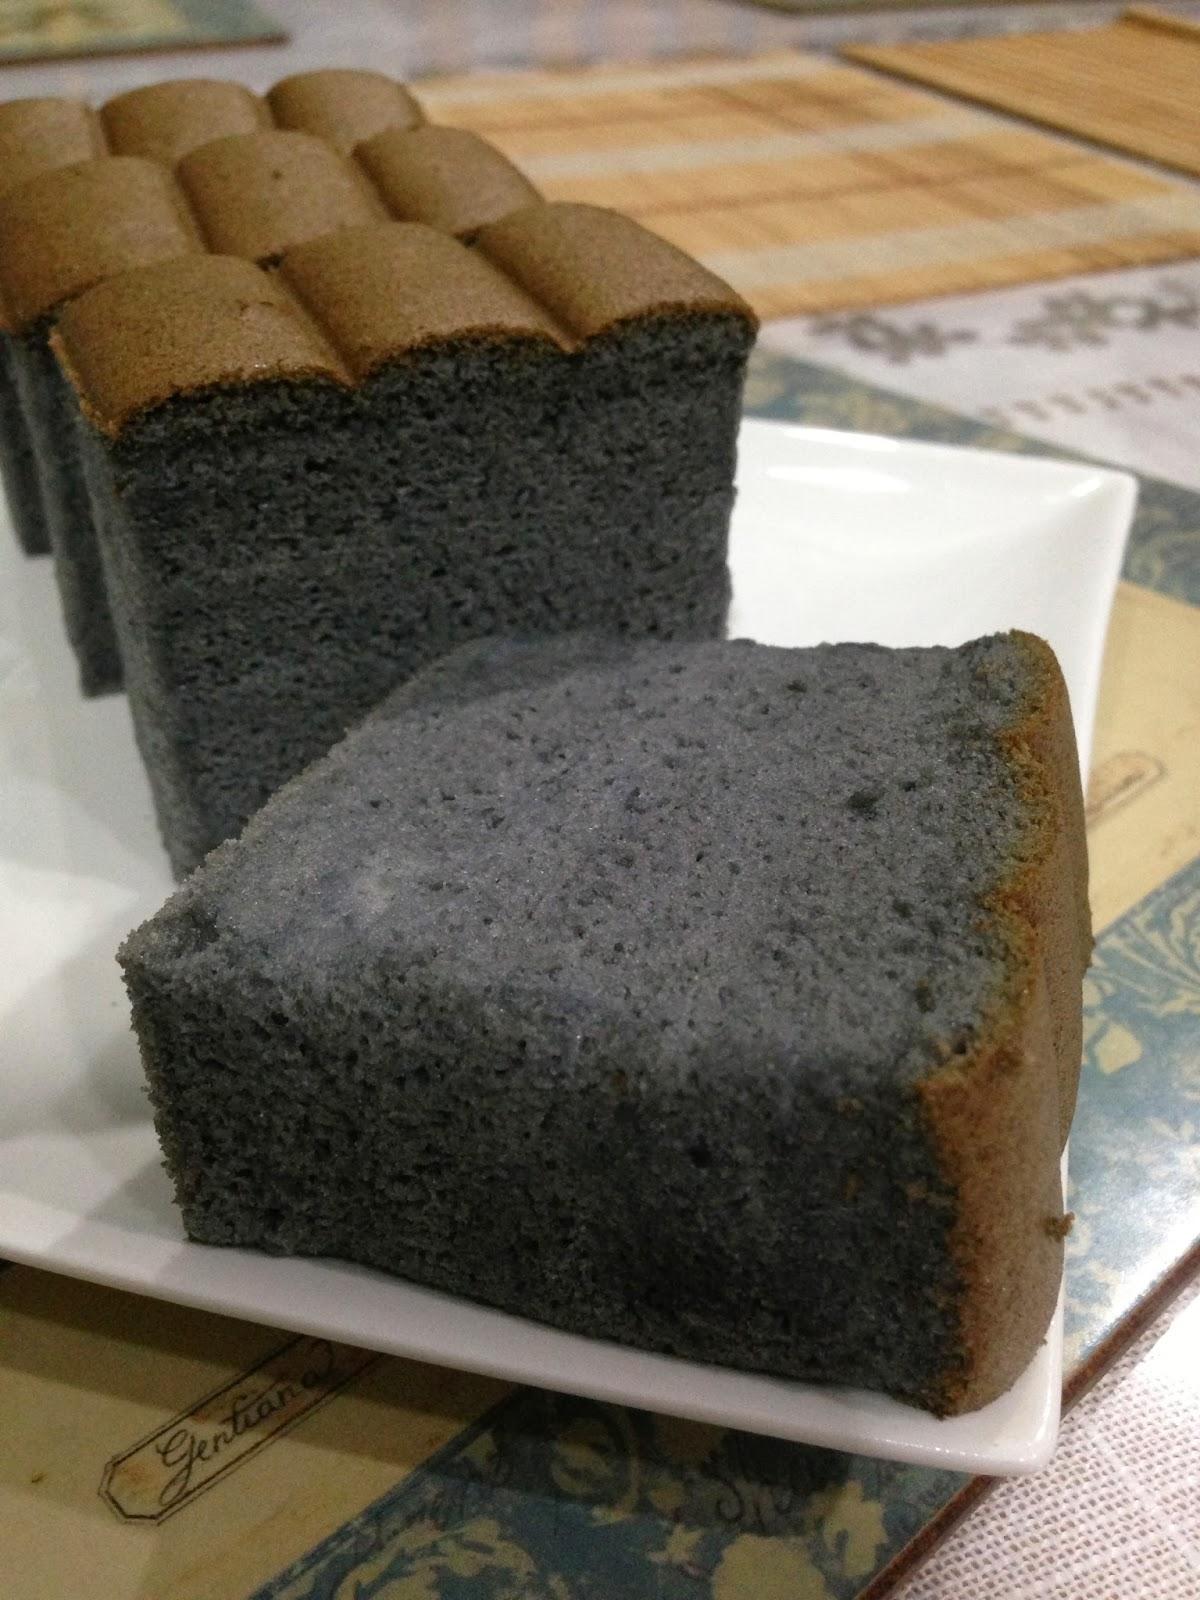 Ogura cake